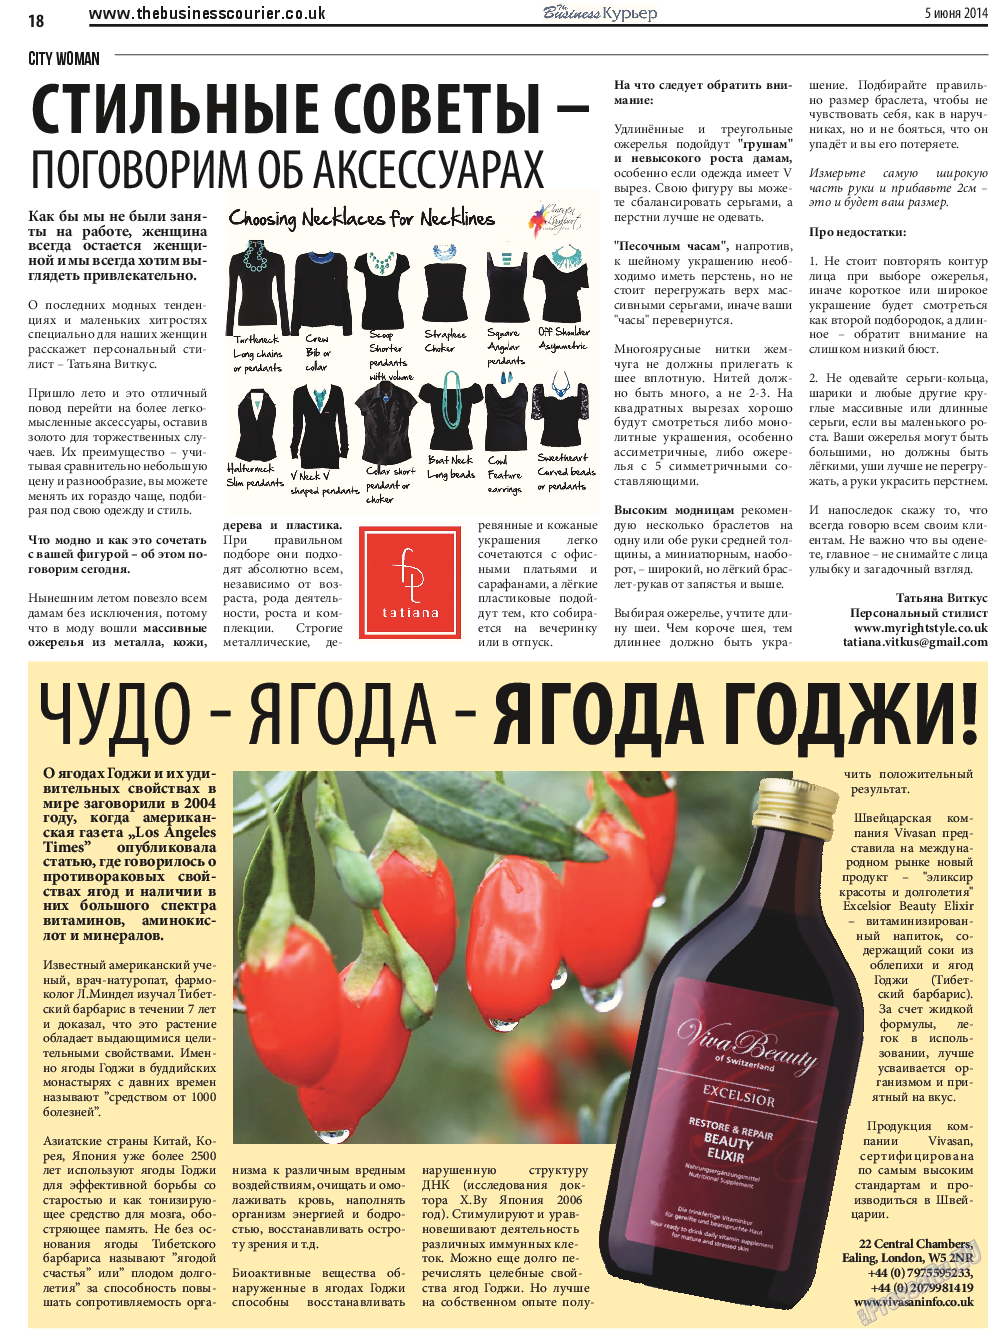 The Business Курьер, газета. 2014 №24 стр.18